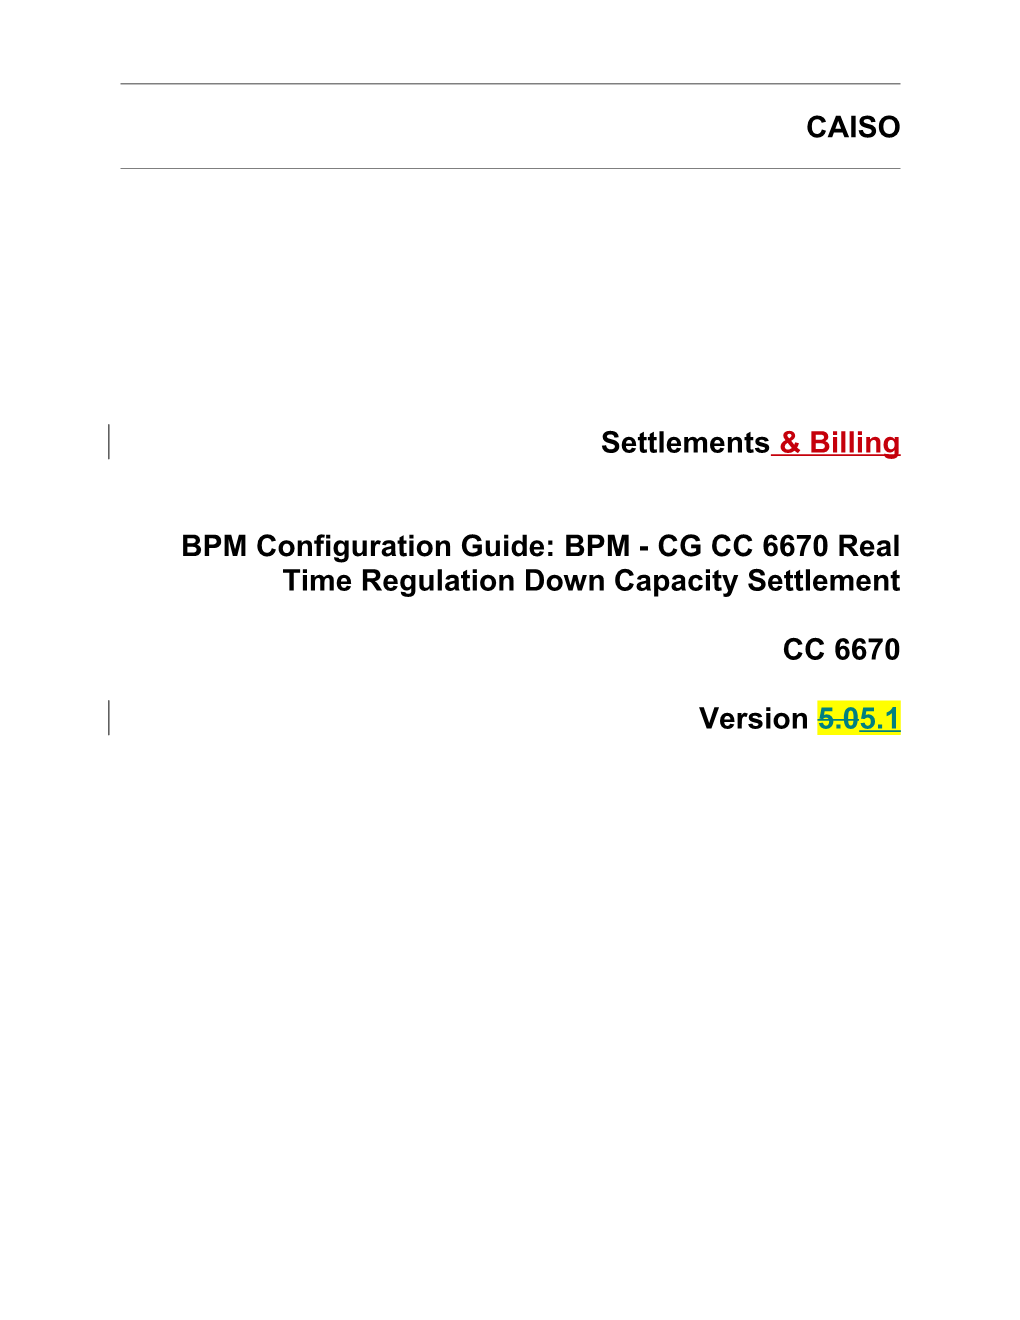 BPM - CG CC 6670 Real Time Regulation Down Capacity Settlement